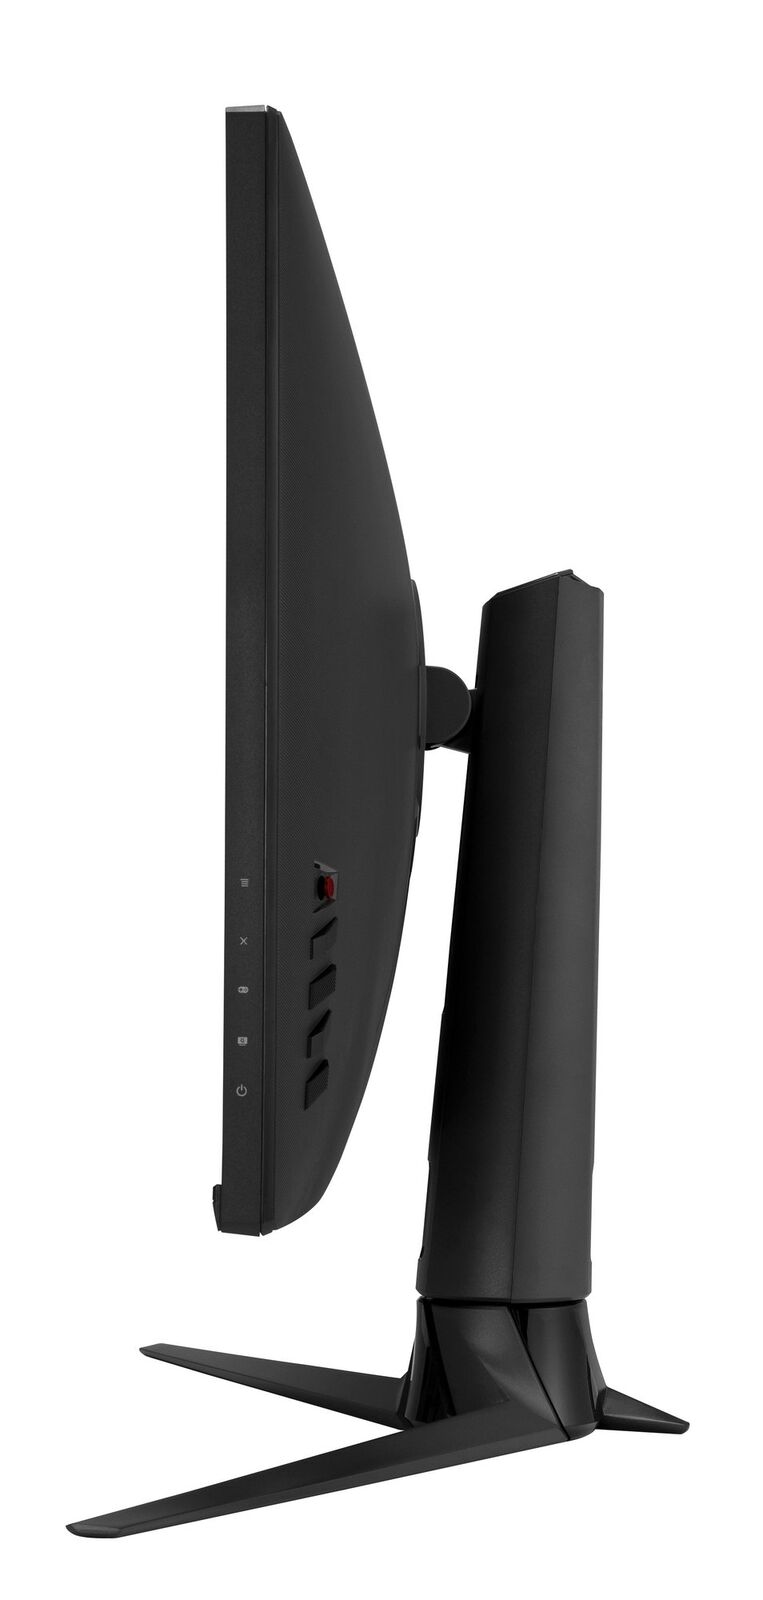 ASUS ROG Swift PG32UQ 32" Gaming Monitor - 4K Ultra HD 144 Hz IPS Black - SamaTechs